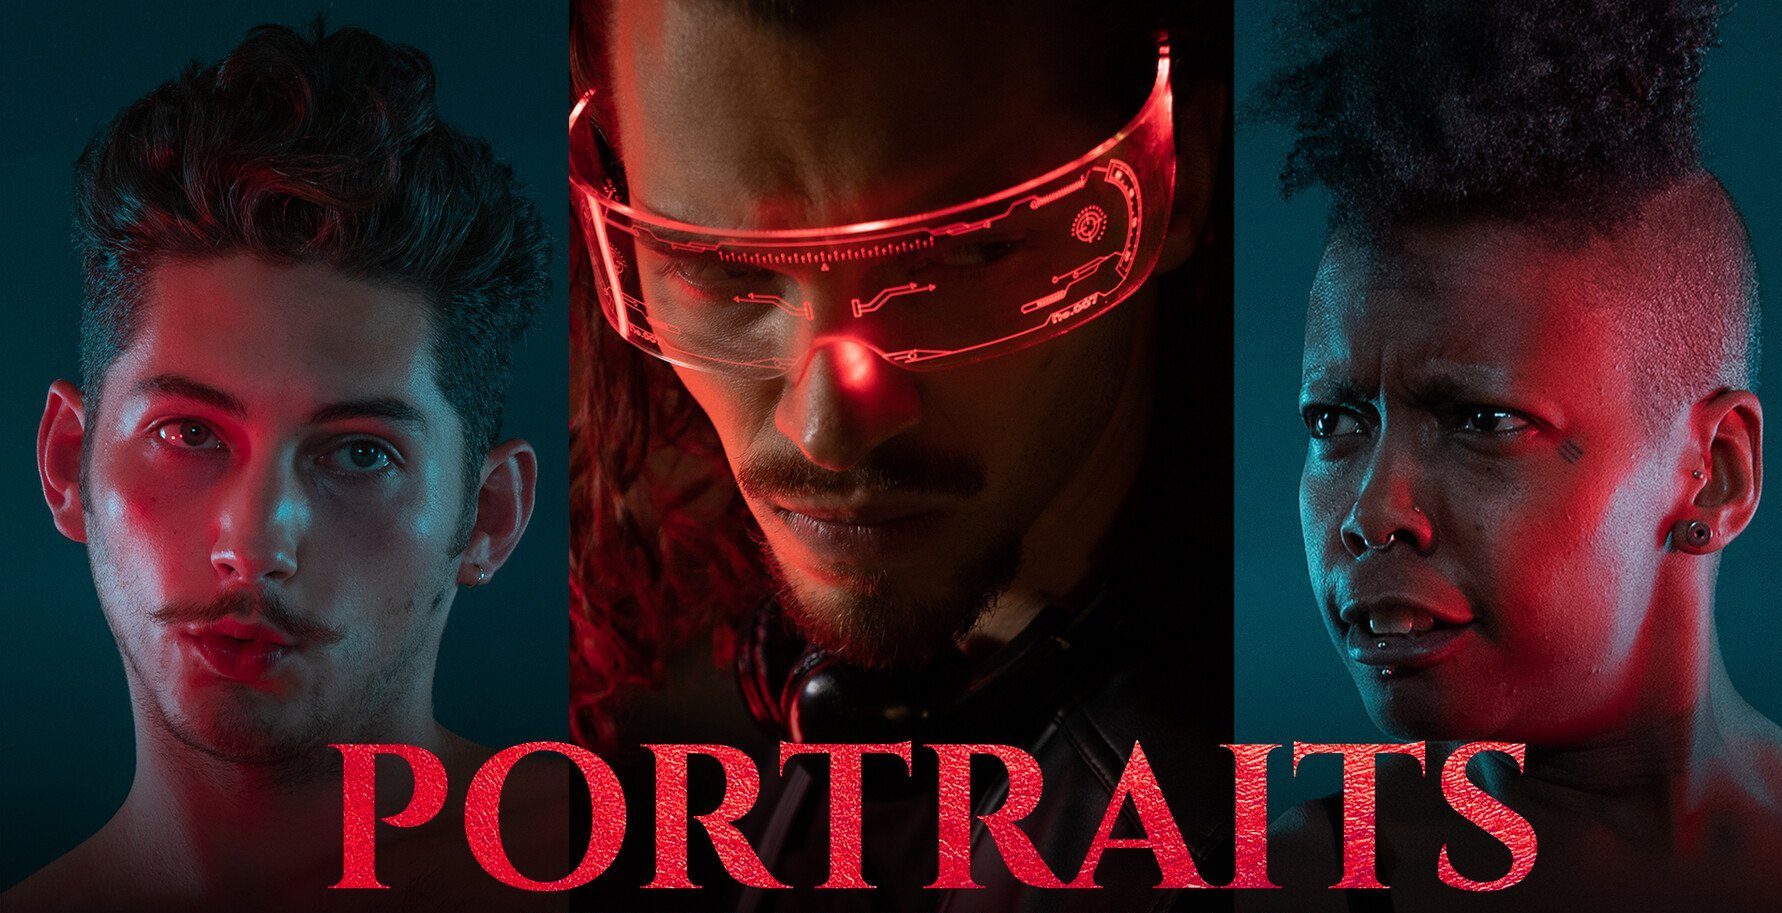 three face portraits of cyberpunk people